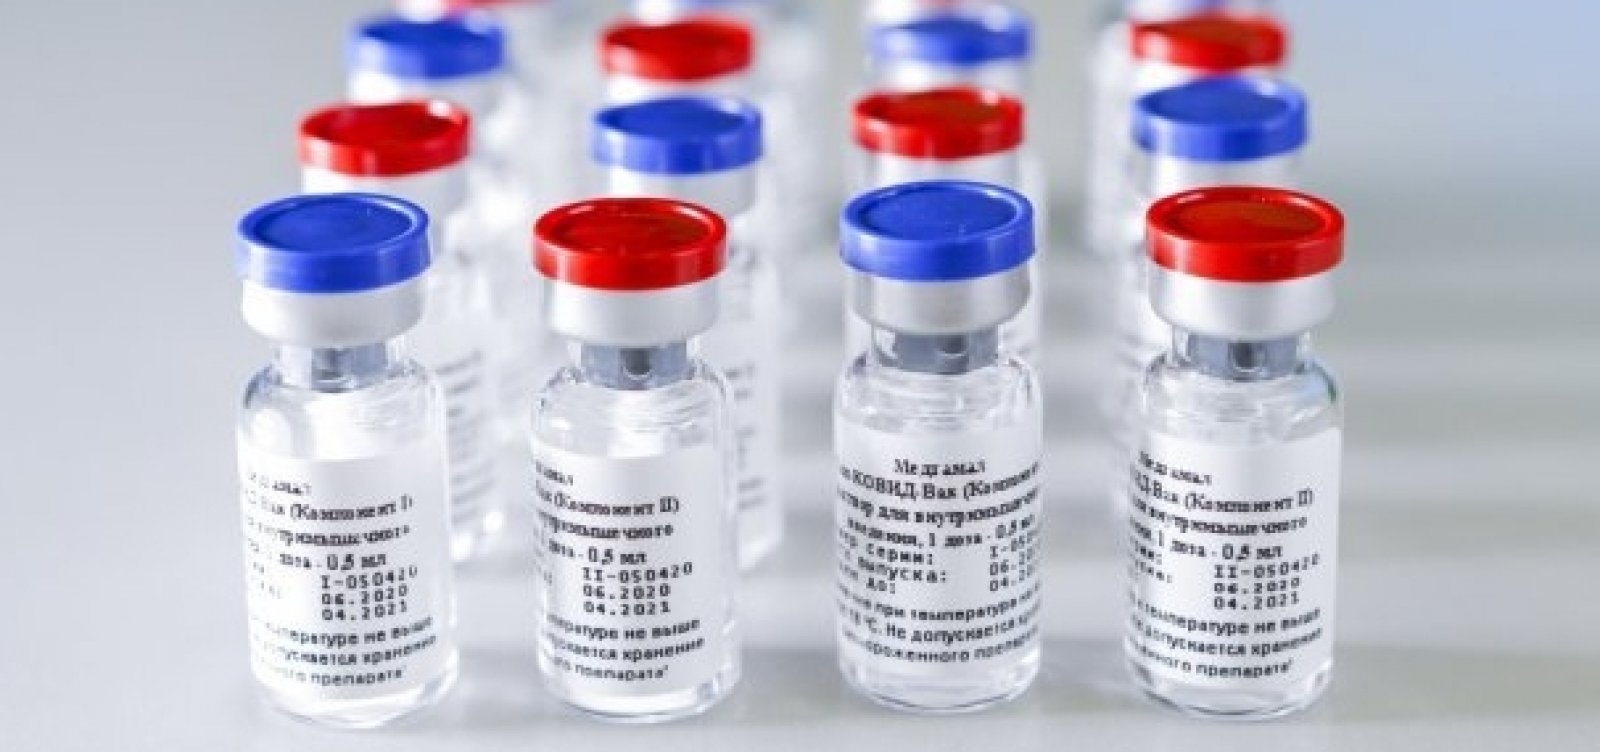 Covid-19: Anvisa recebe pedido para análise da vacina da Janssen-Cilag